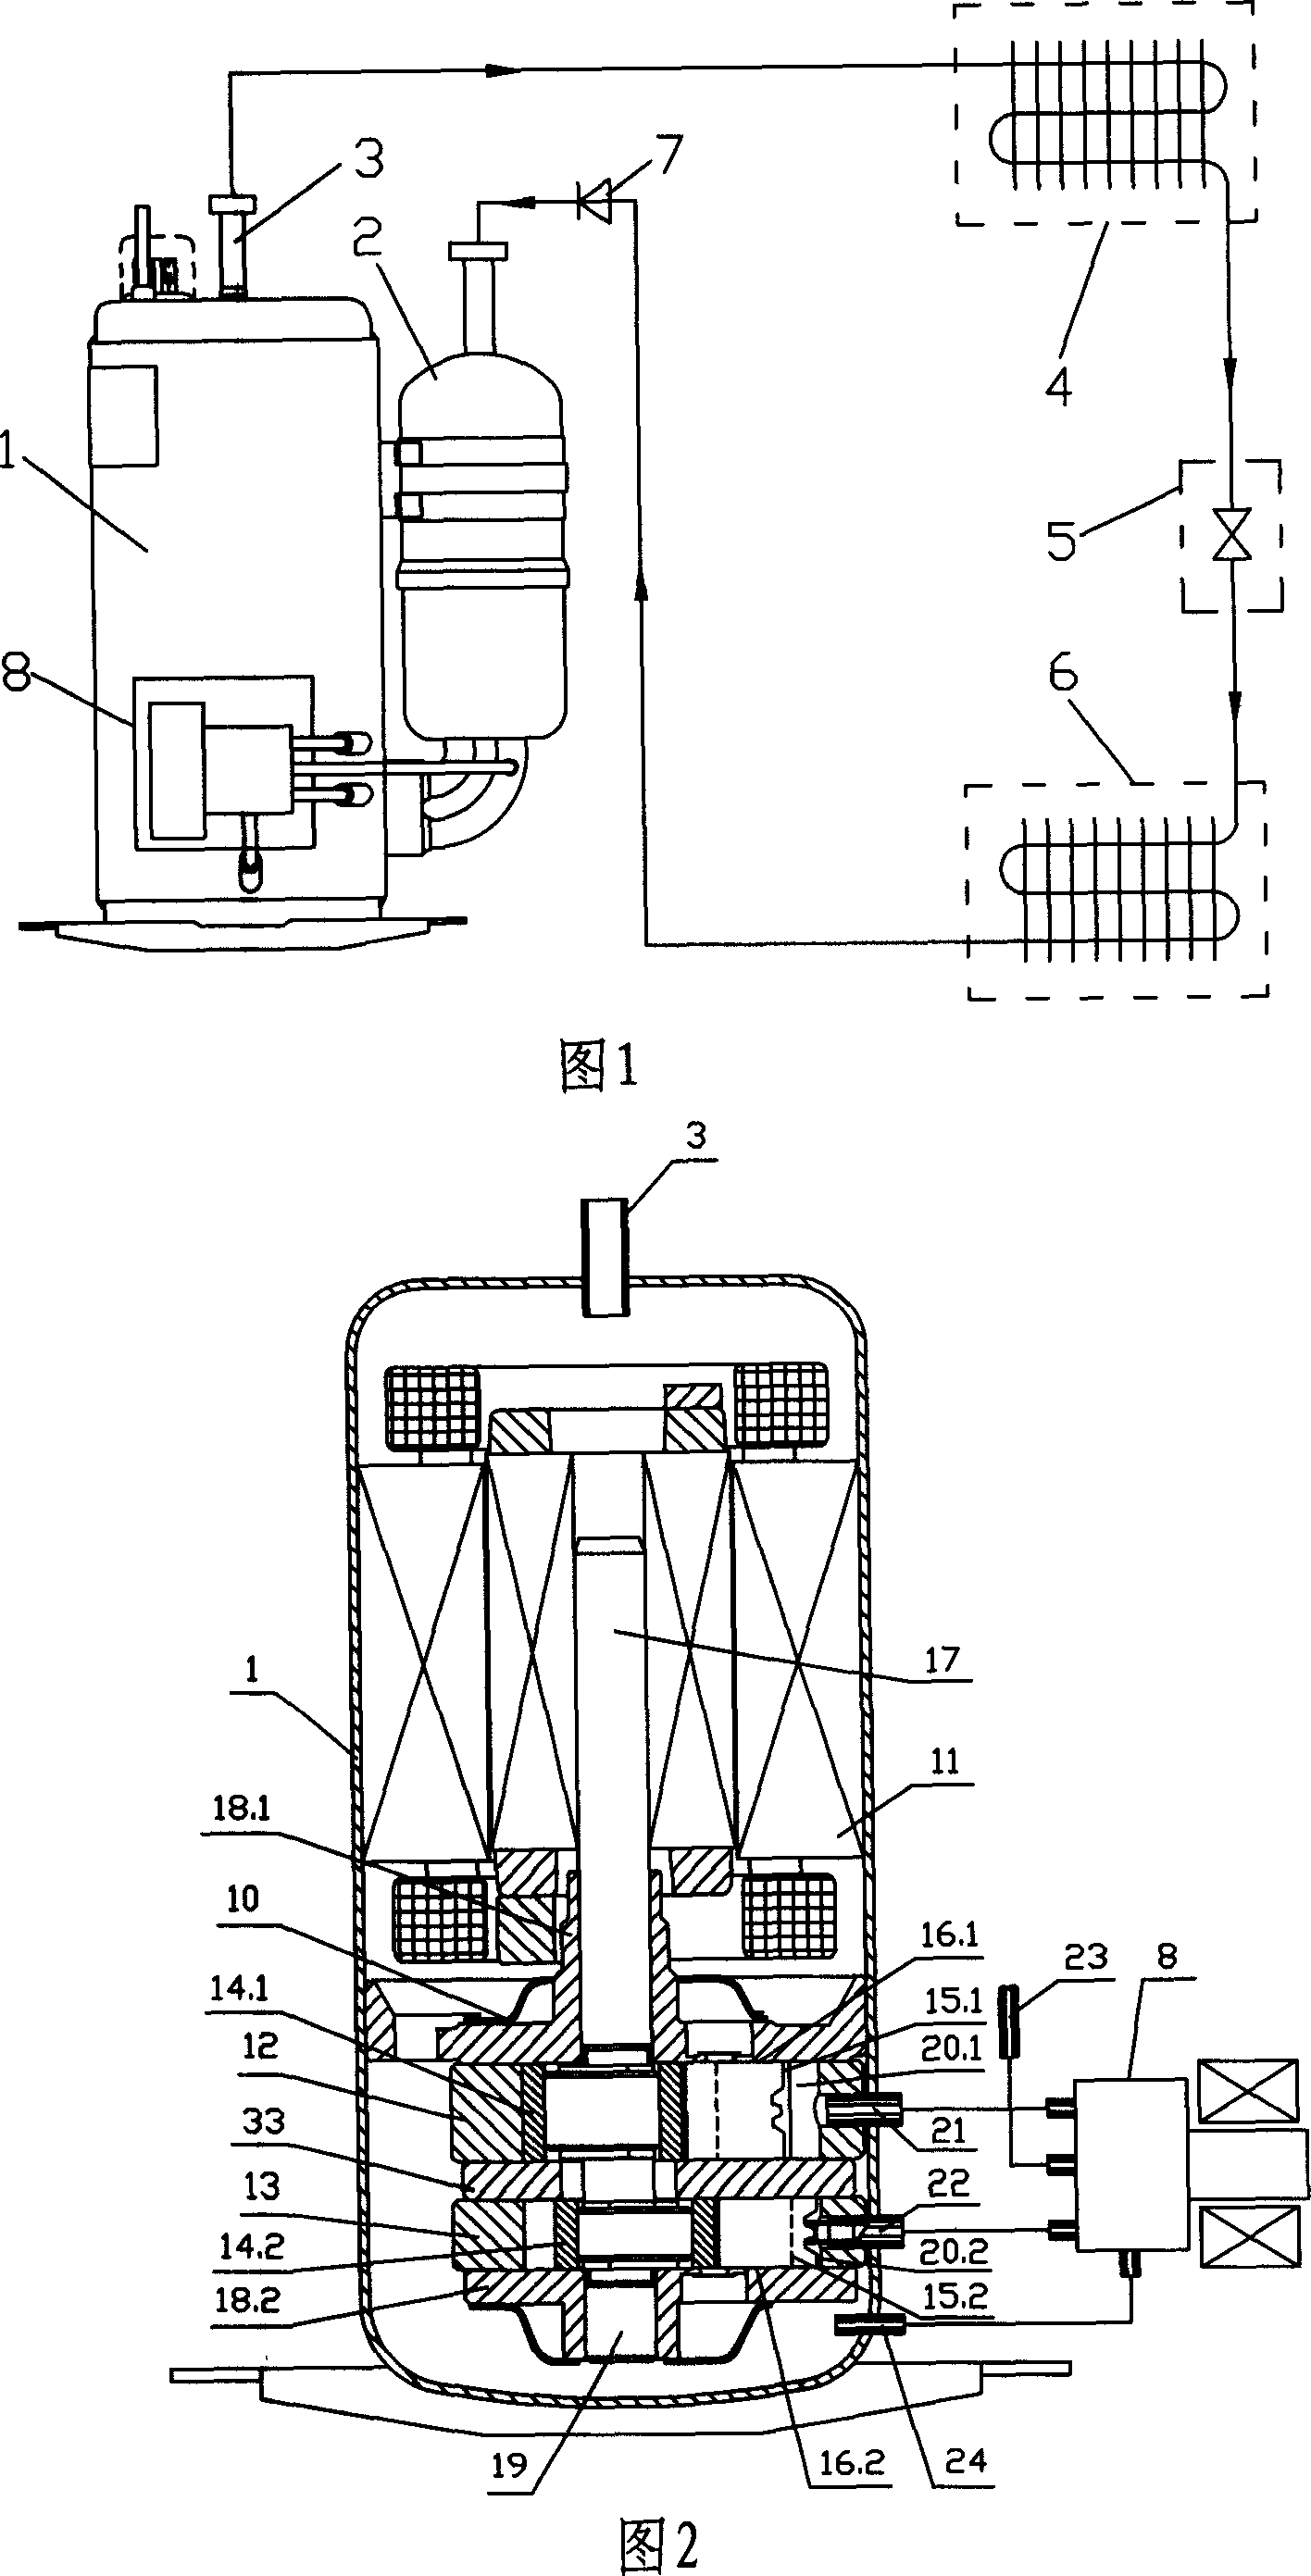 Control method of rotary compressor